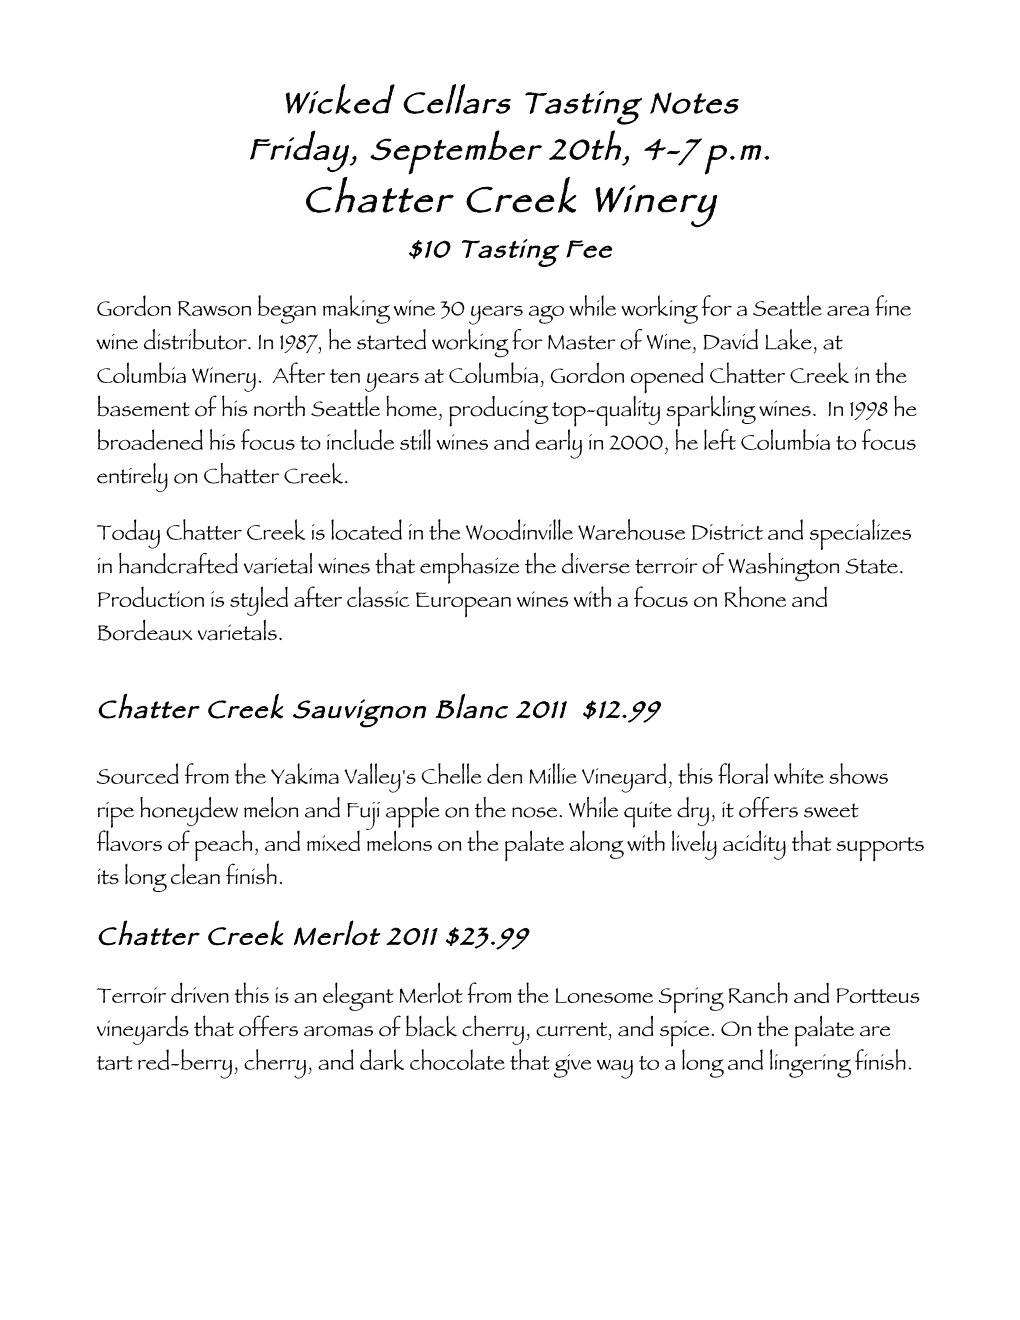 Chatter Creek Winery $10 Tasting Fee